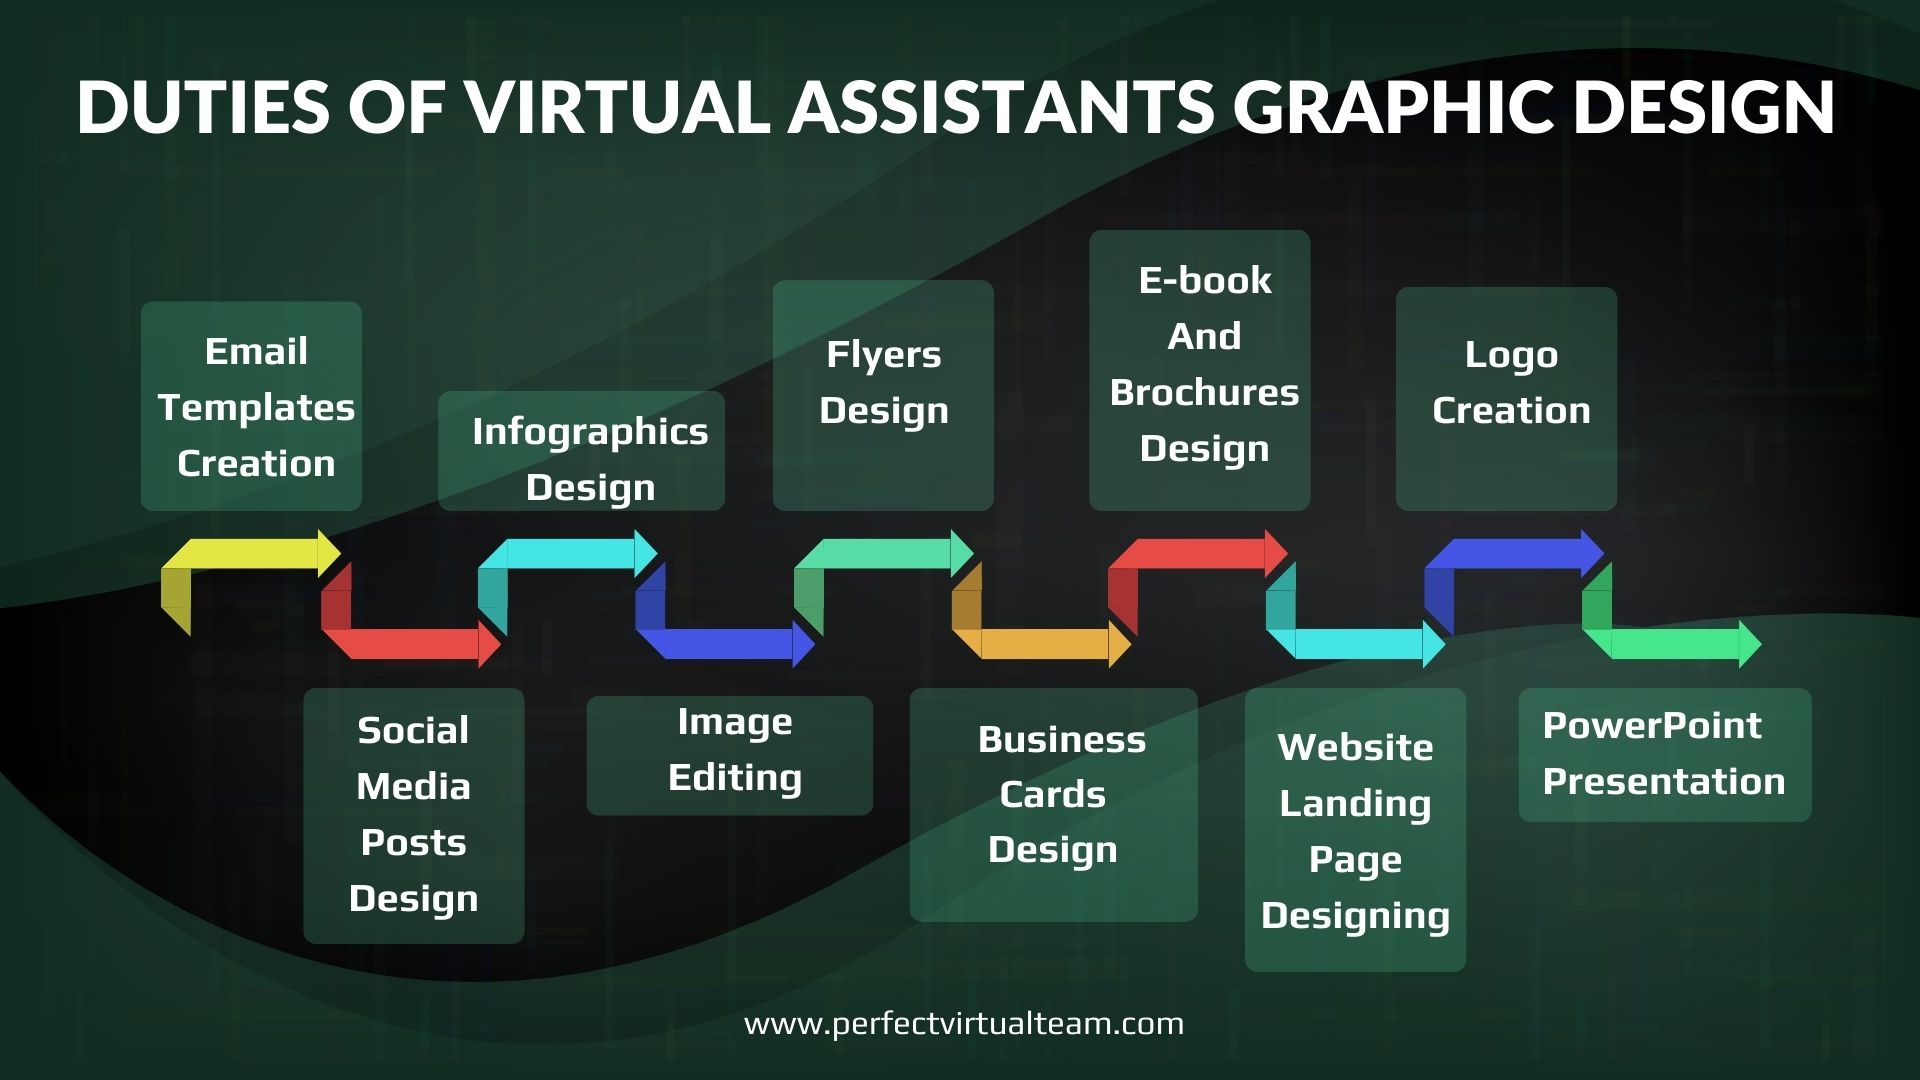 Duties of Graphic Design Virtual Assistants